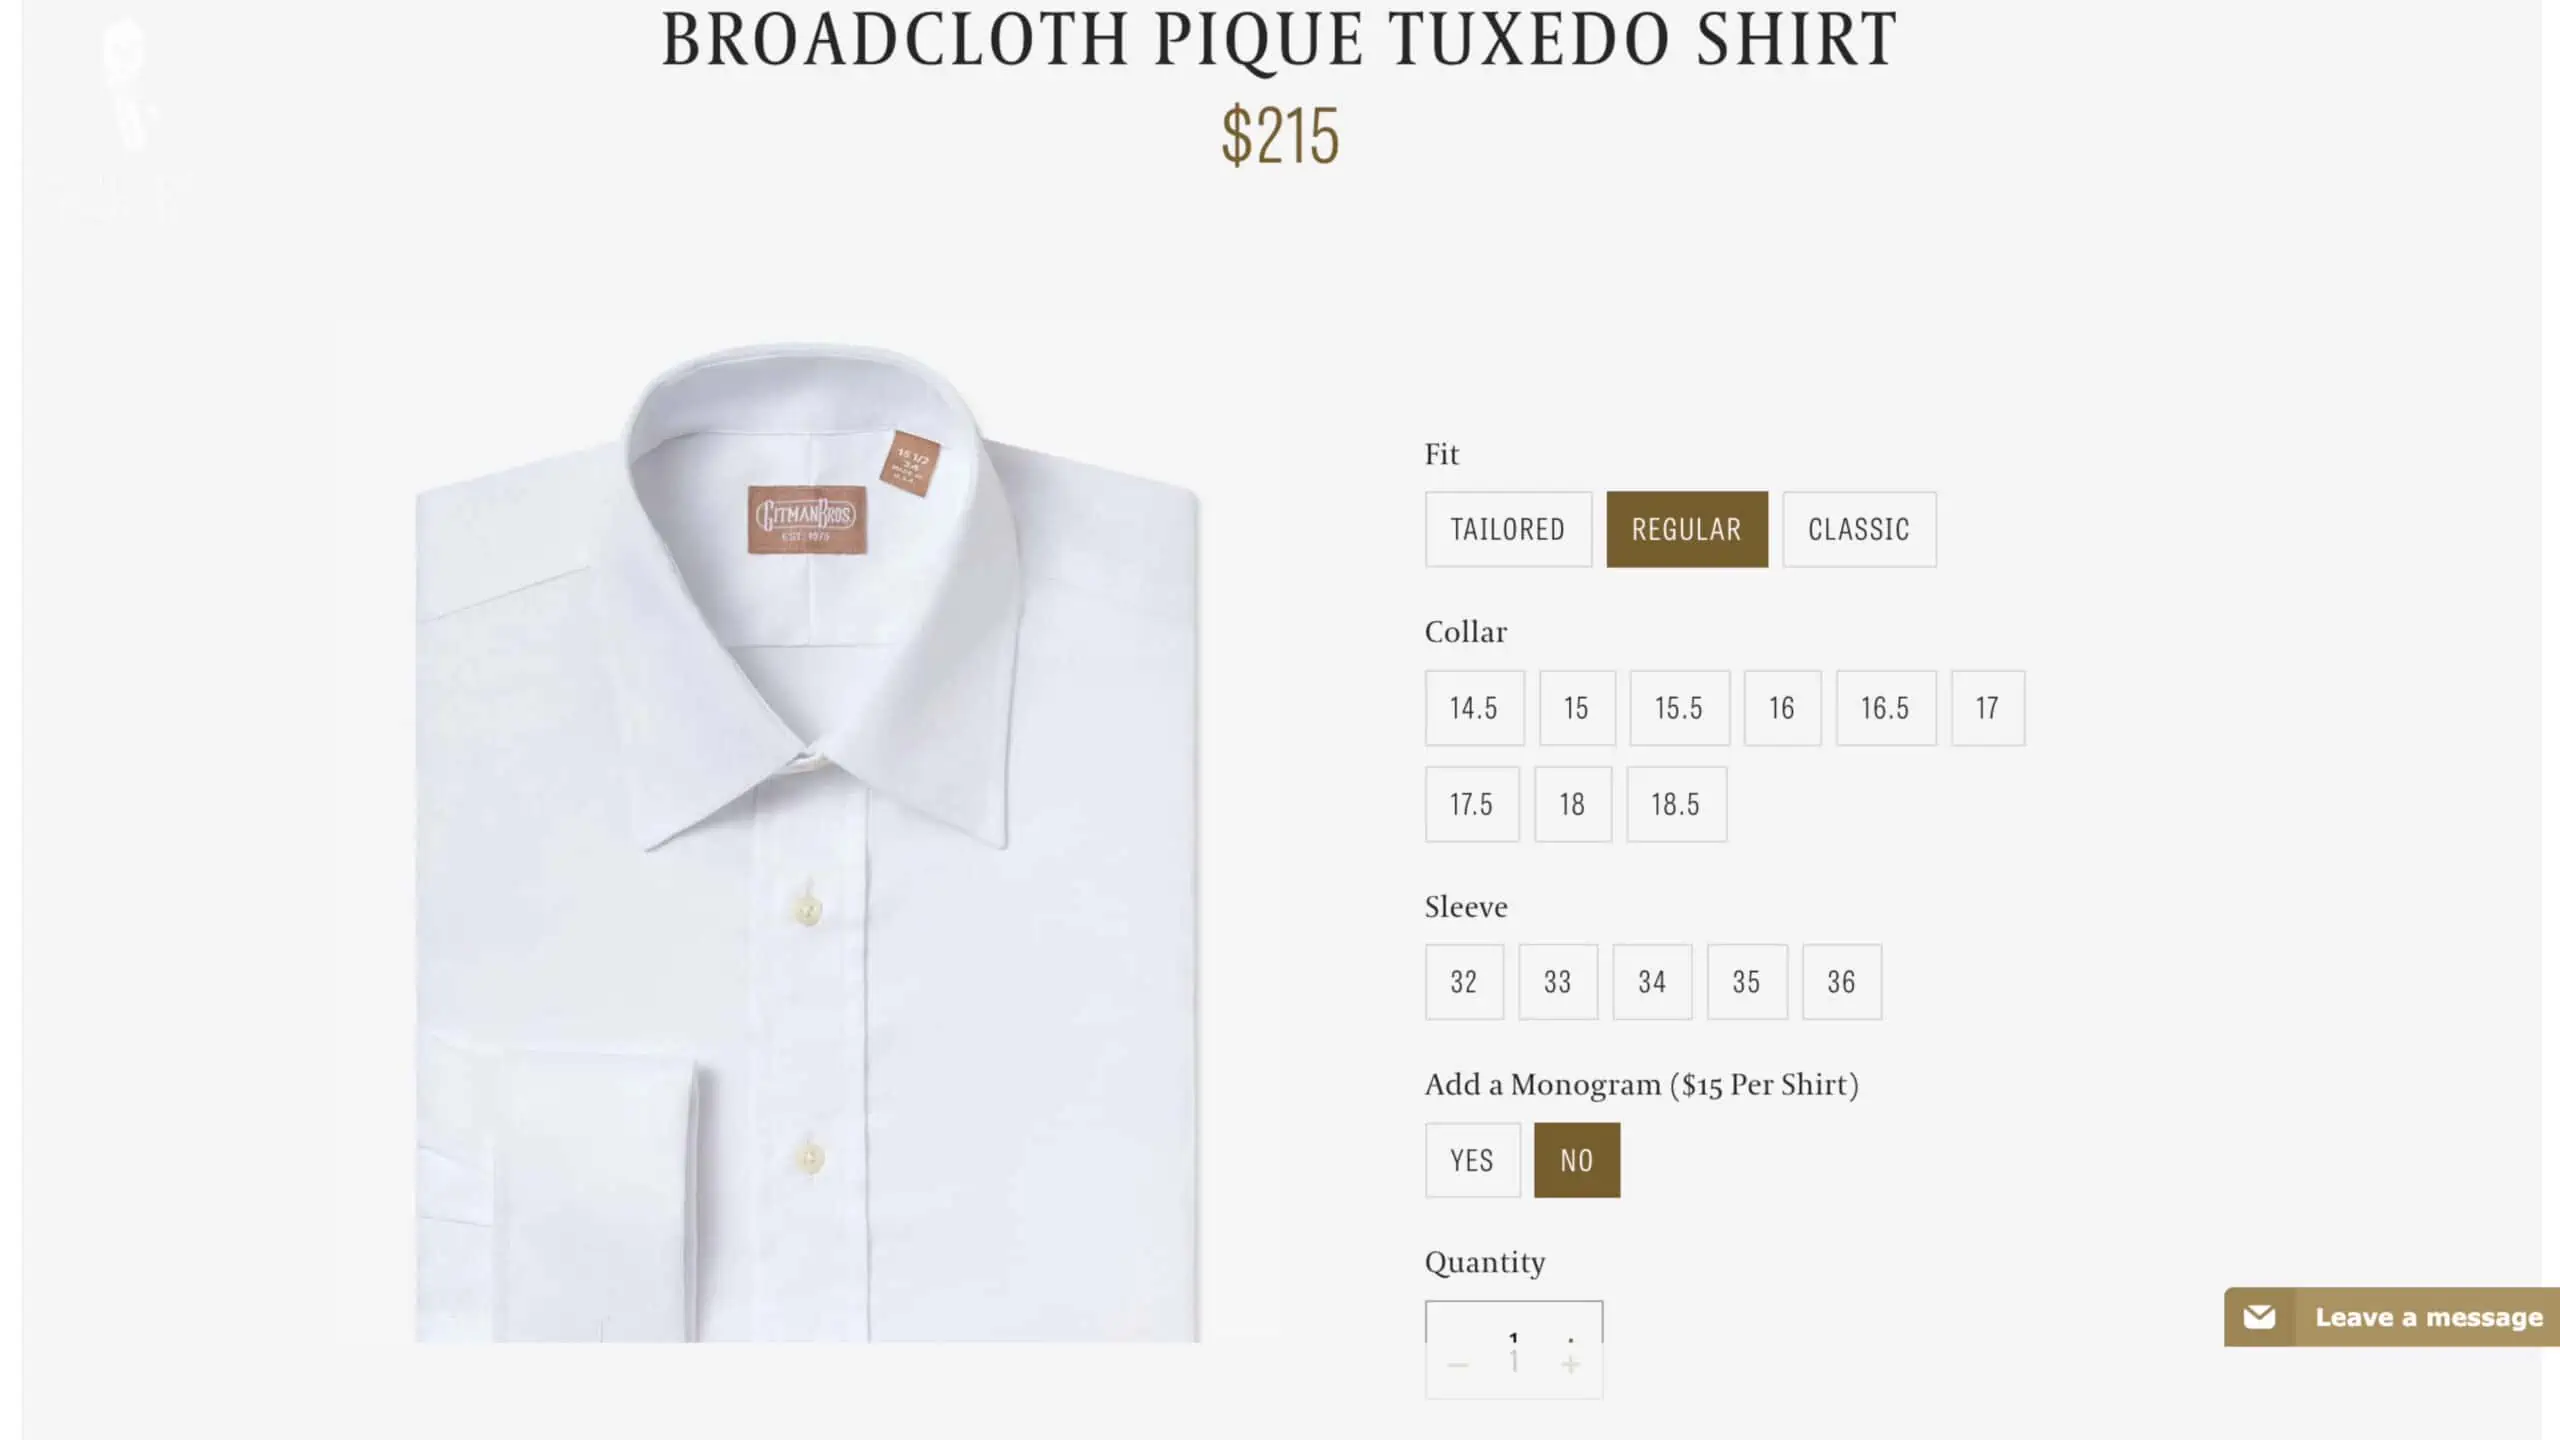 White Pin Point Broadcloth Pique Tuxedo Shirt from Gitman Bros.